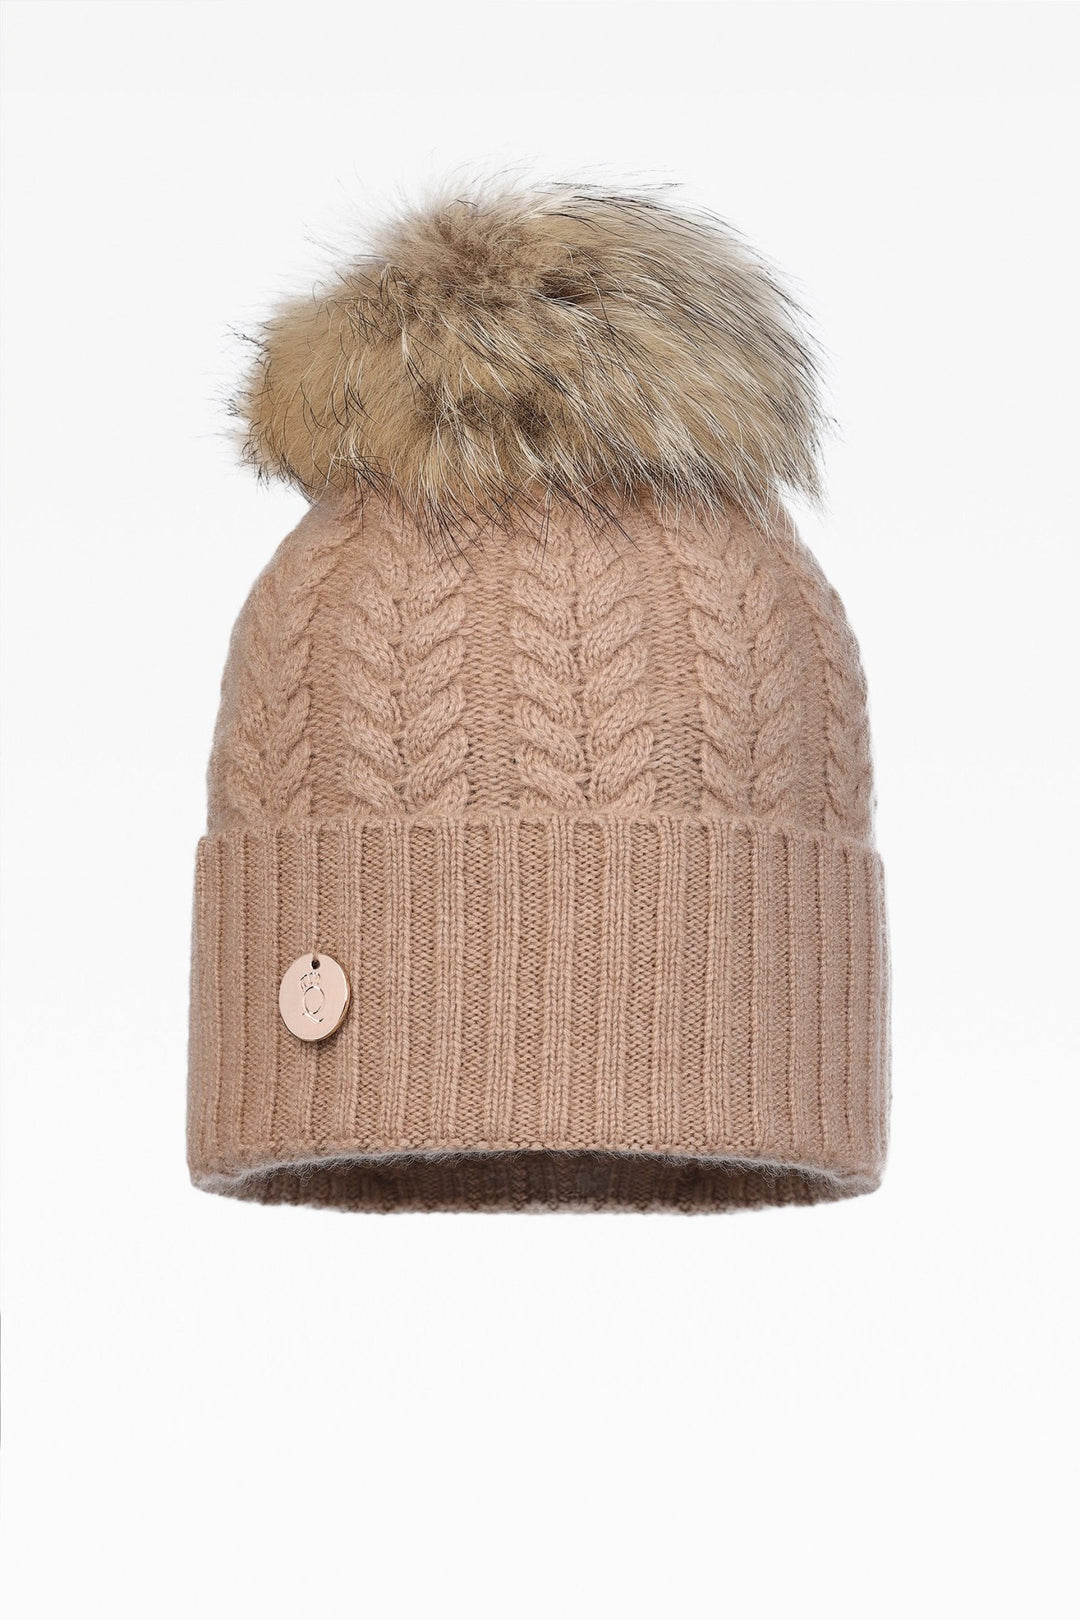 Georgie Cable Rib Pom Pom Hat - Real Fur - Dunedin Cashmere